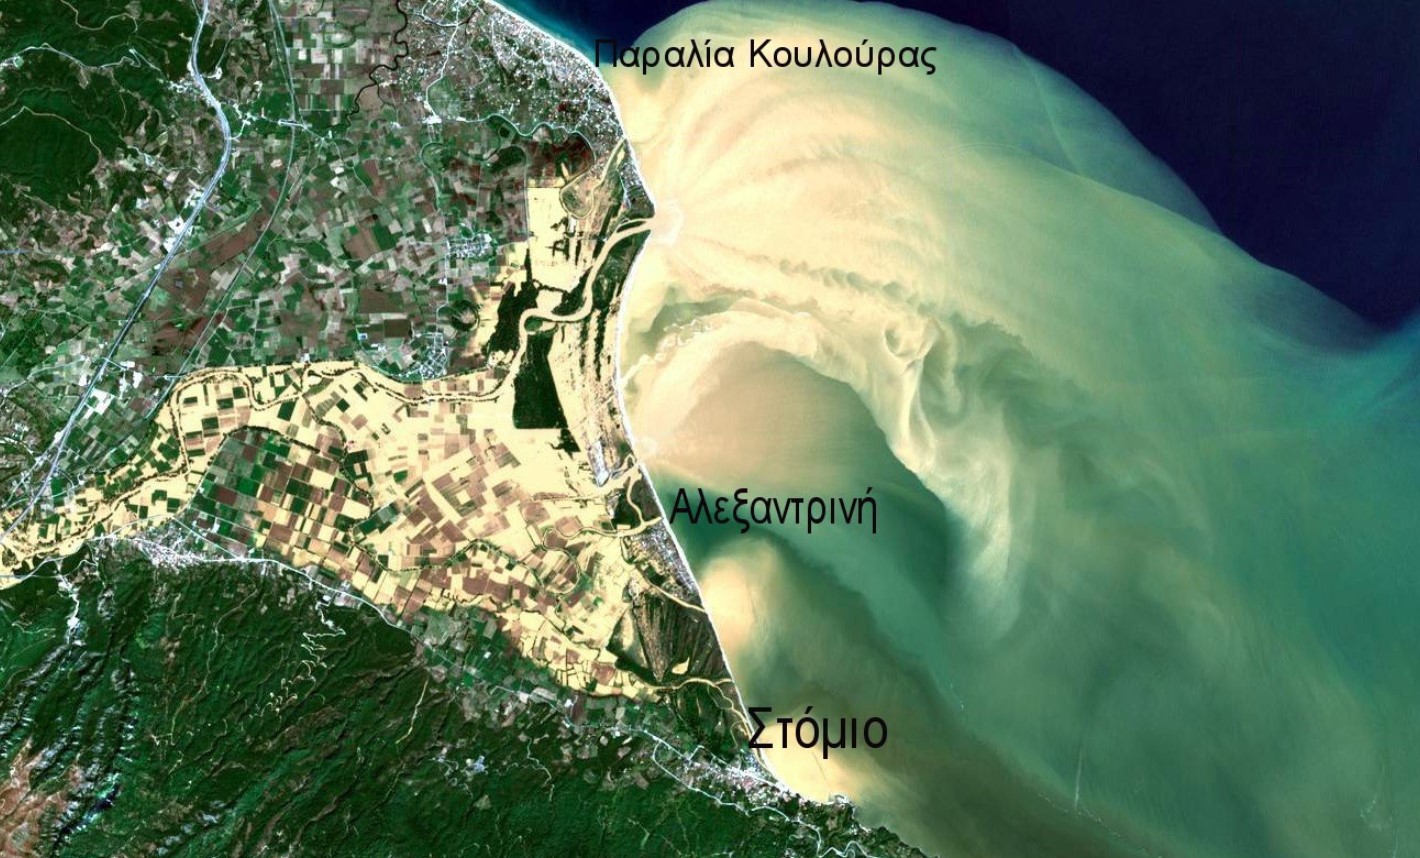 Copernicus: Σοκαριστική εικόνα από δορυφόρο απαθανατίζει την καταστροφή της κακοκαιρίας στη Θεσσαλία